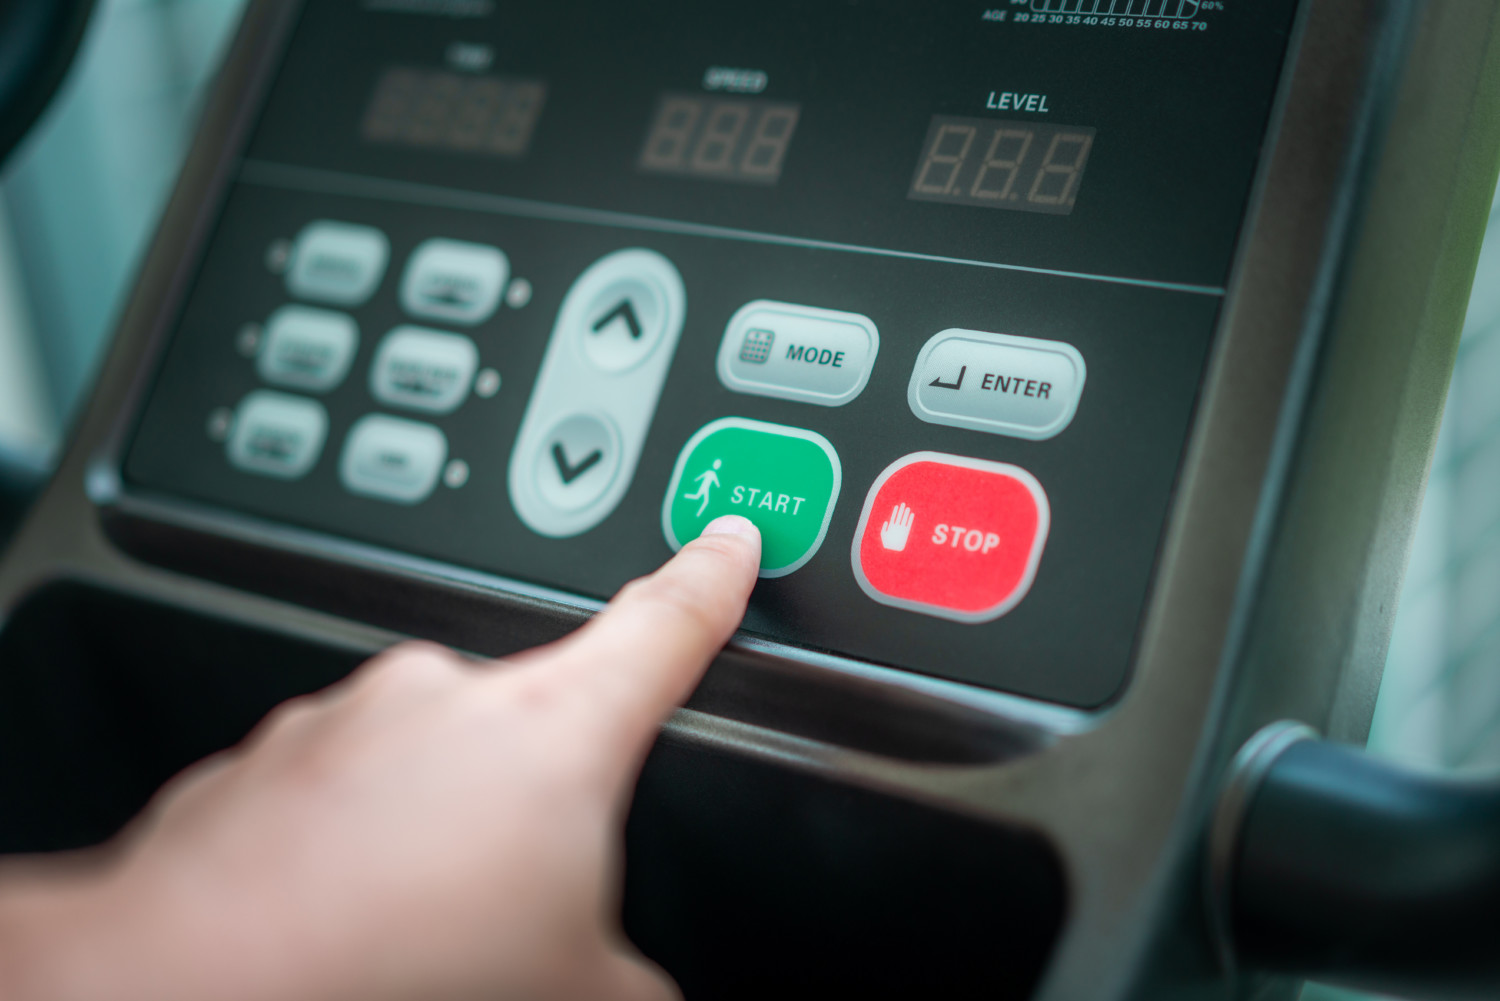 Hand pressing start button on treadmill control panel